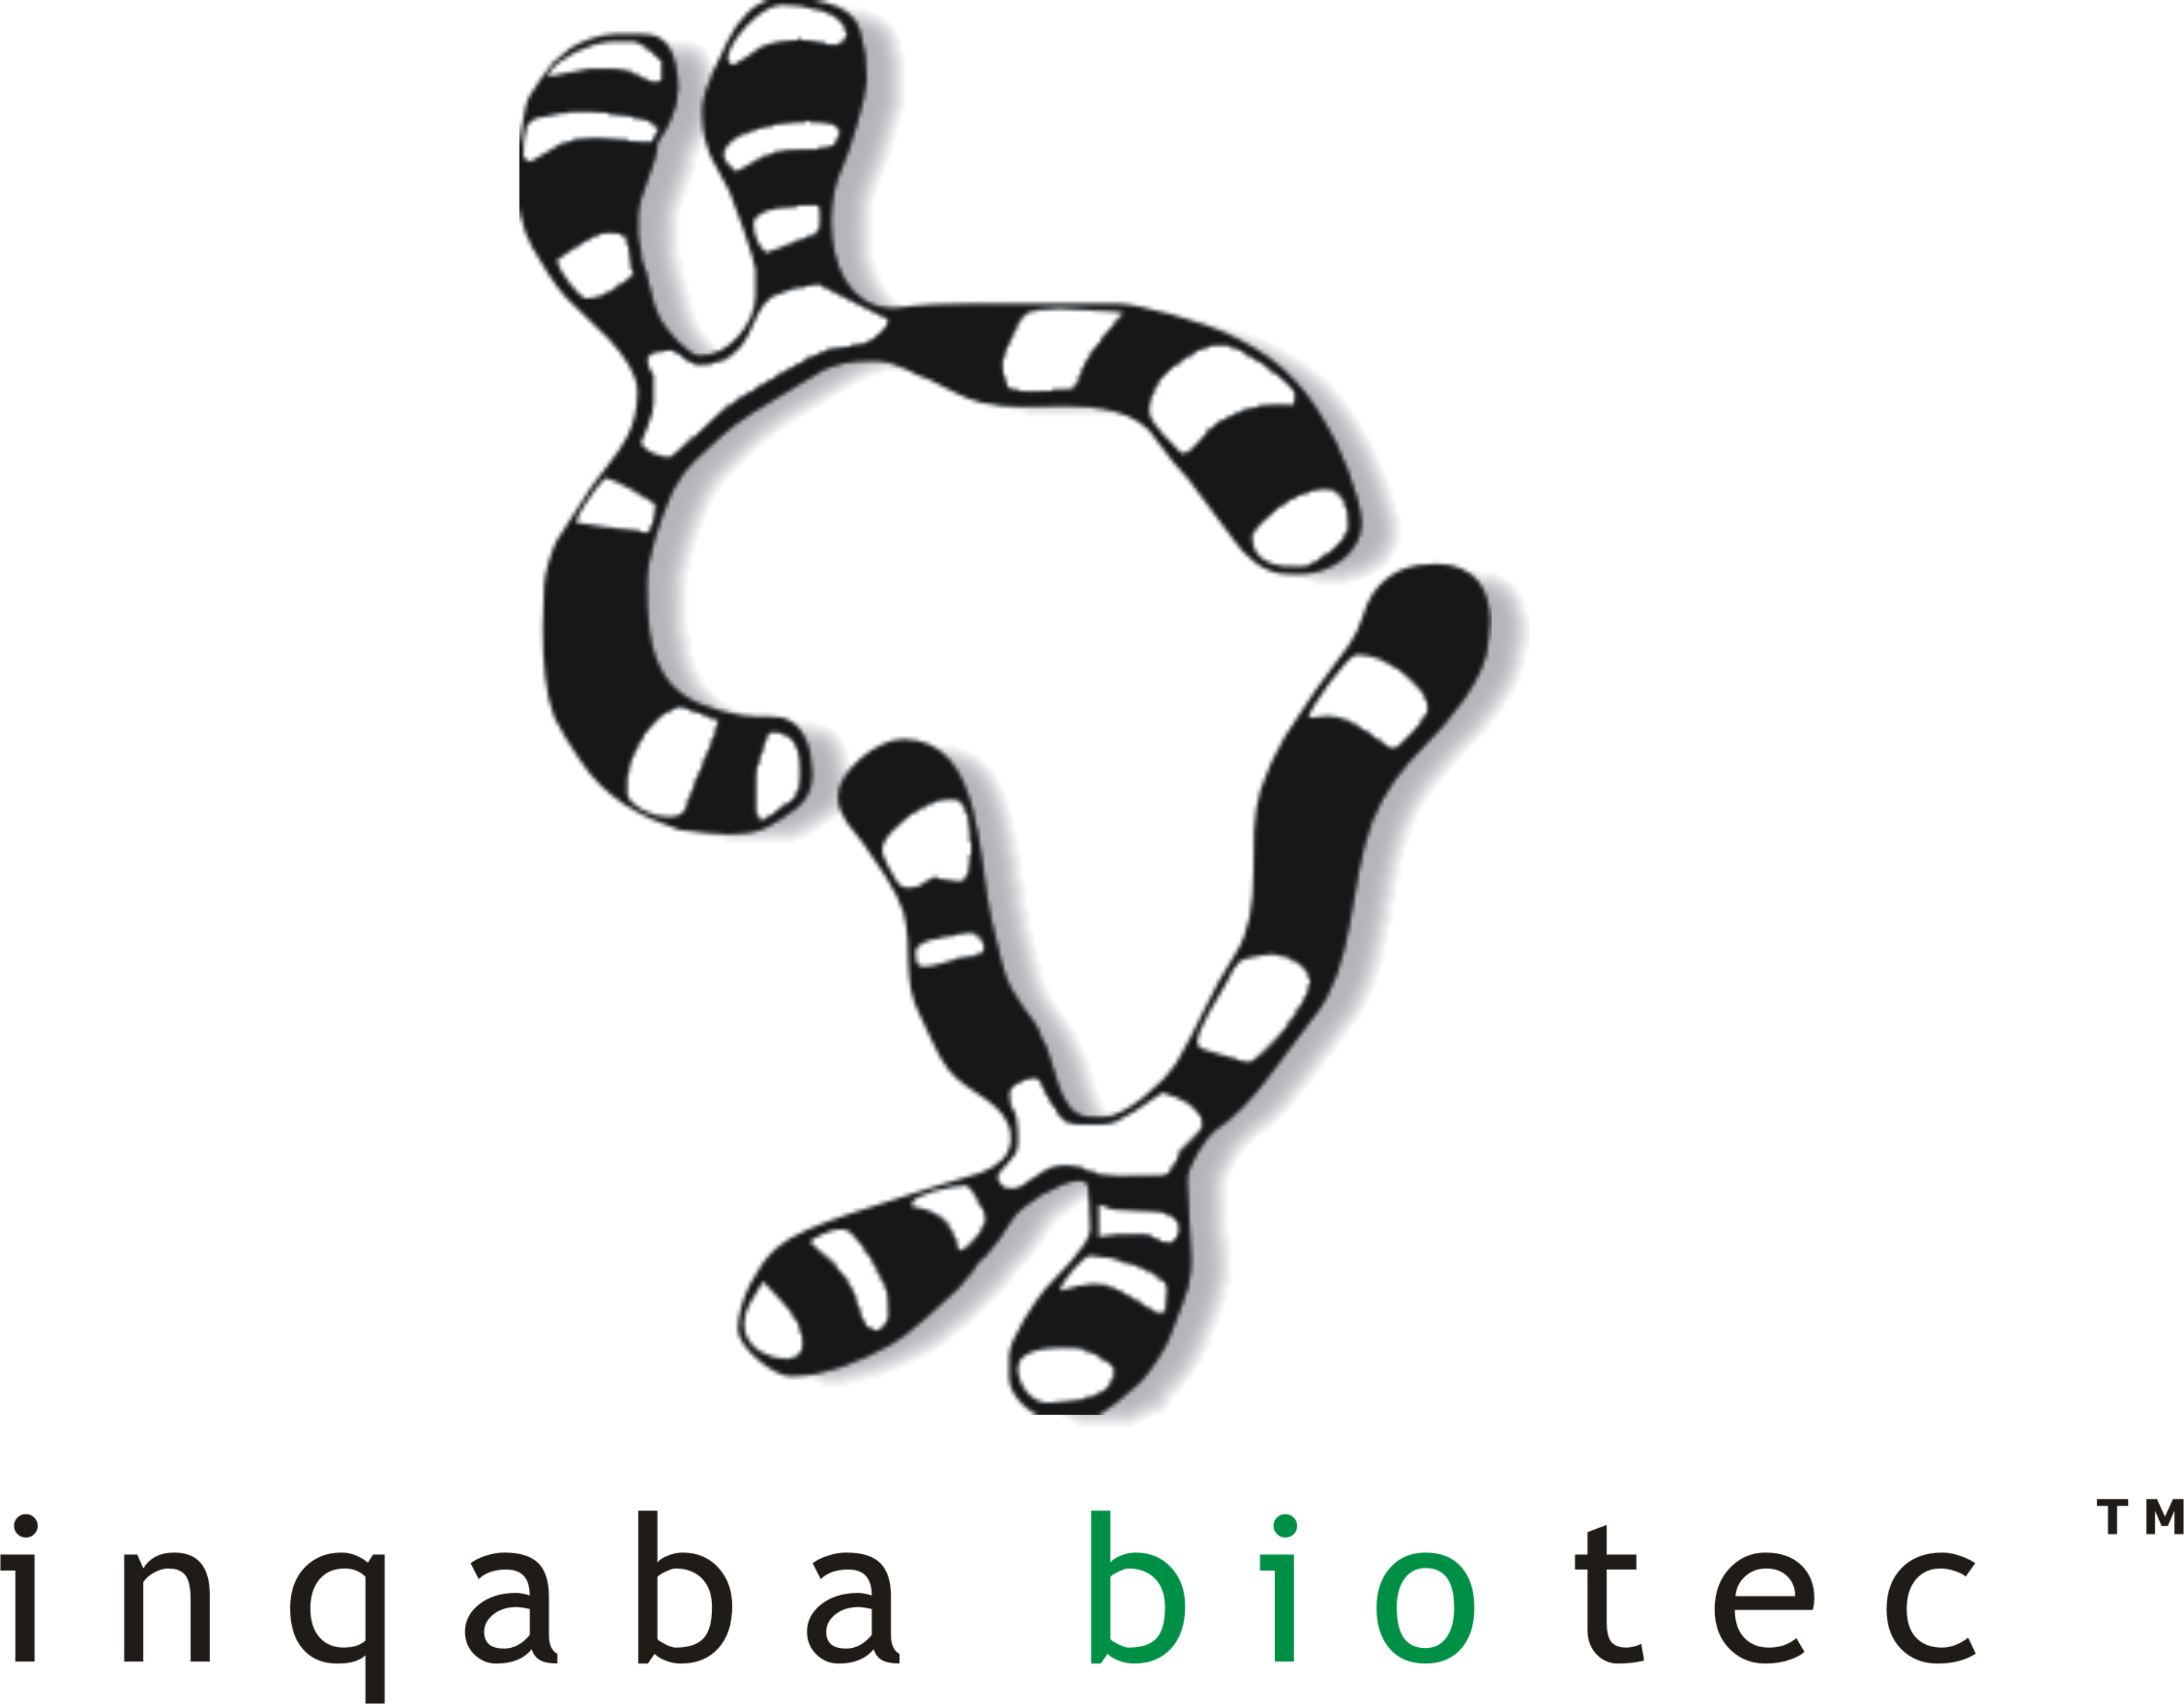 Inqaba biotec